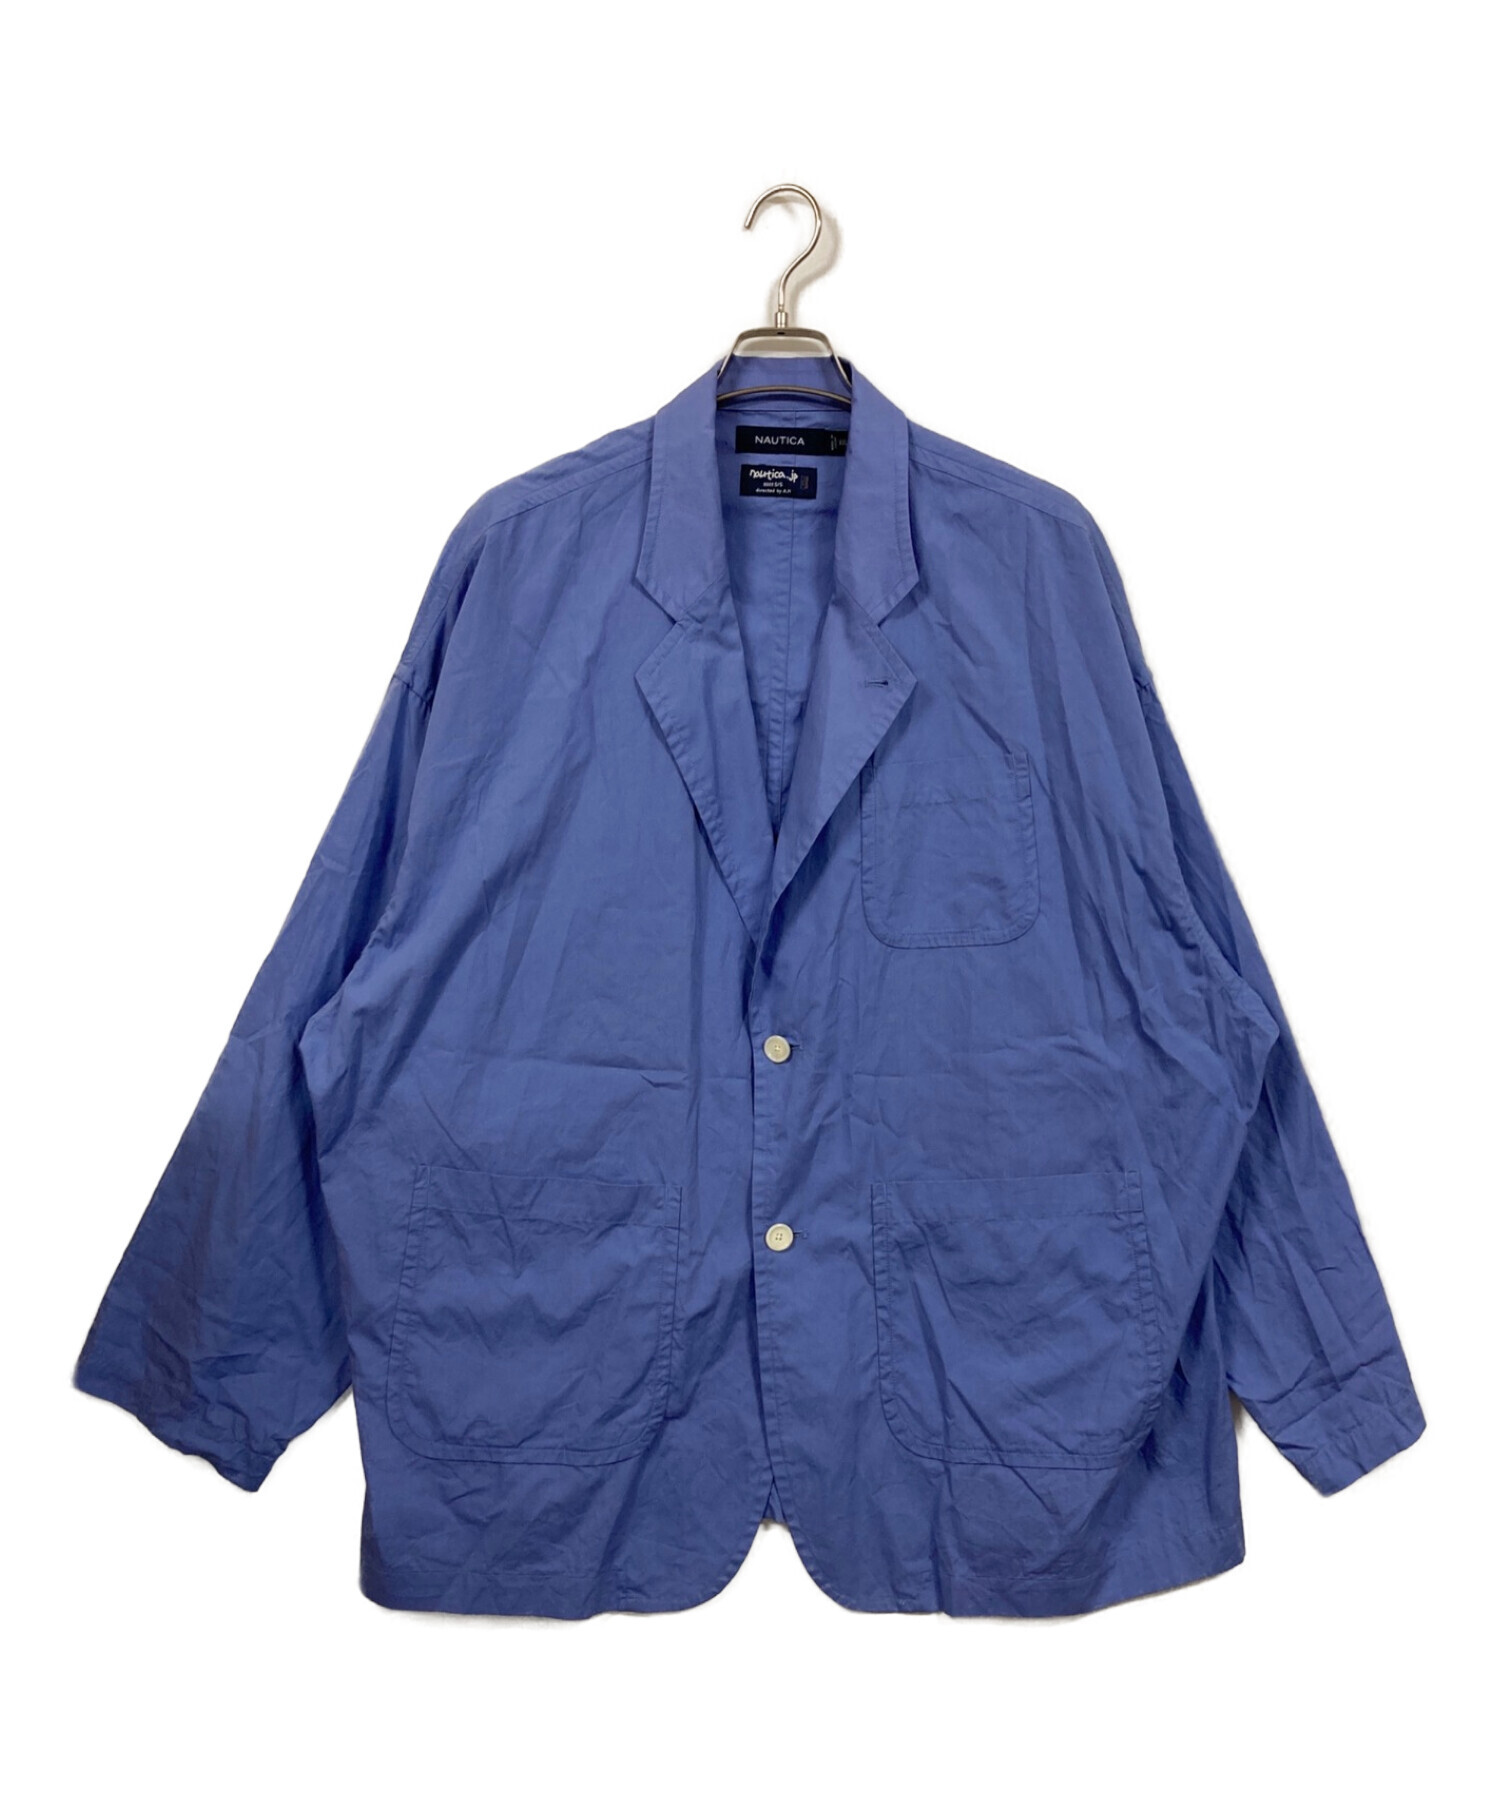 NAUTICA (ノーティカ) ADULT ORIENTED ROBES (アダルトオリエンテッドローブス) Broad Shirt Jacket  ブルー サイズ:ＸＸＬ